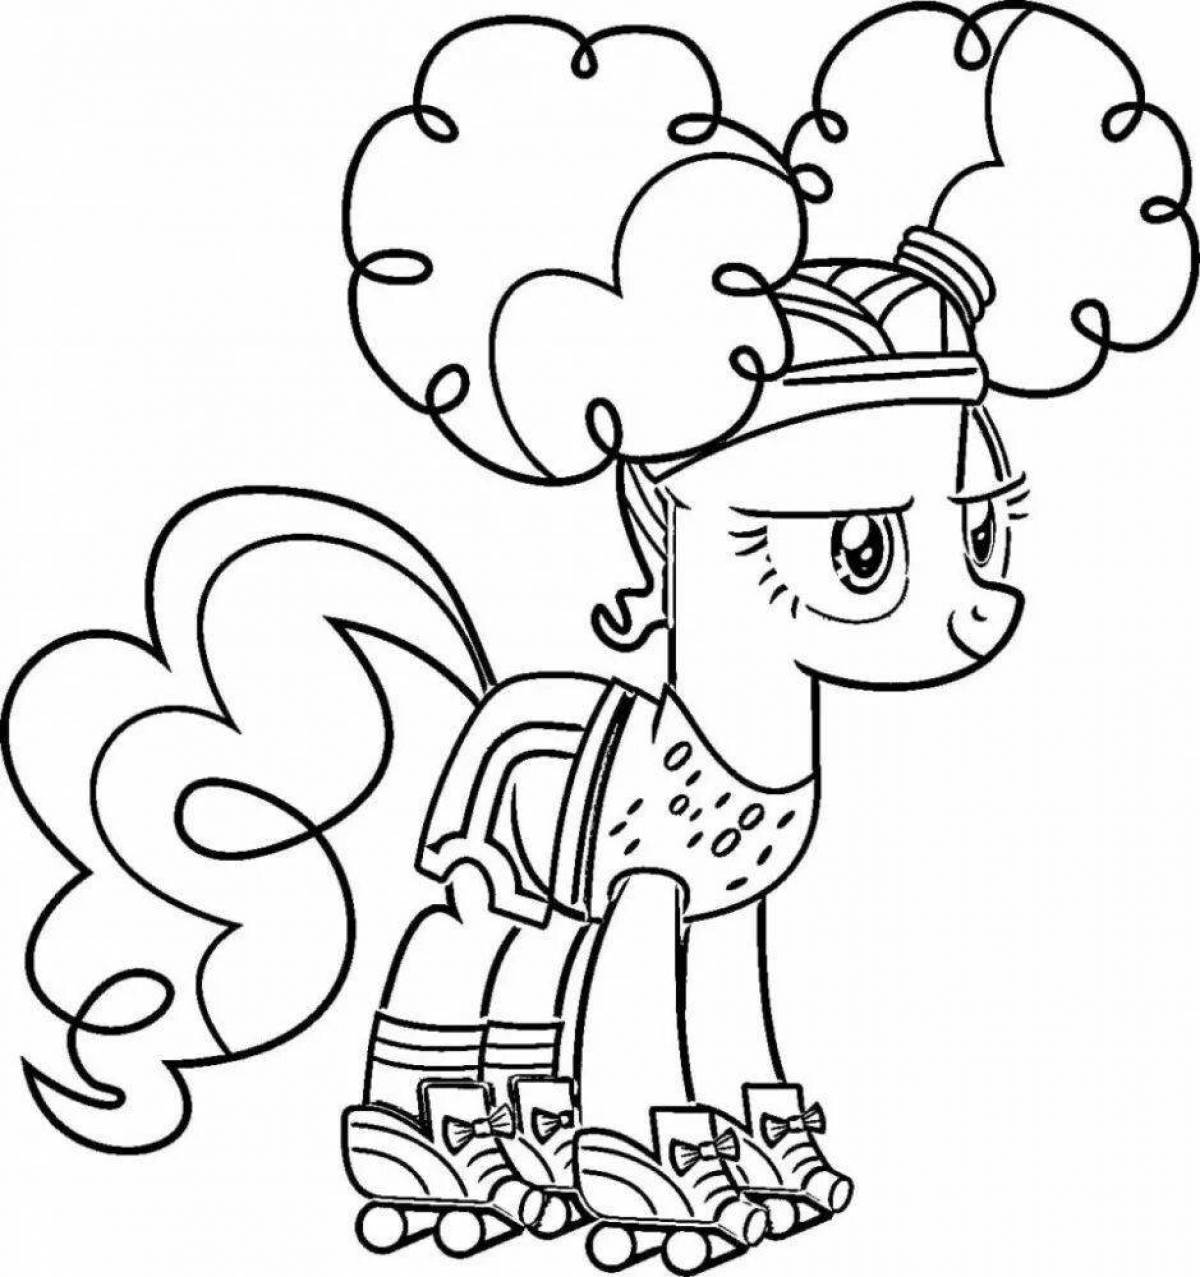 Rampant Pinkie Pie coloring page